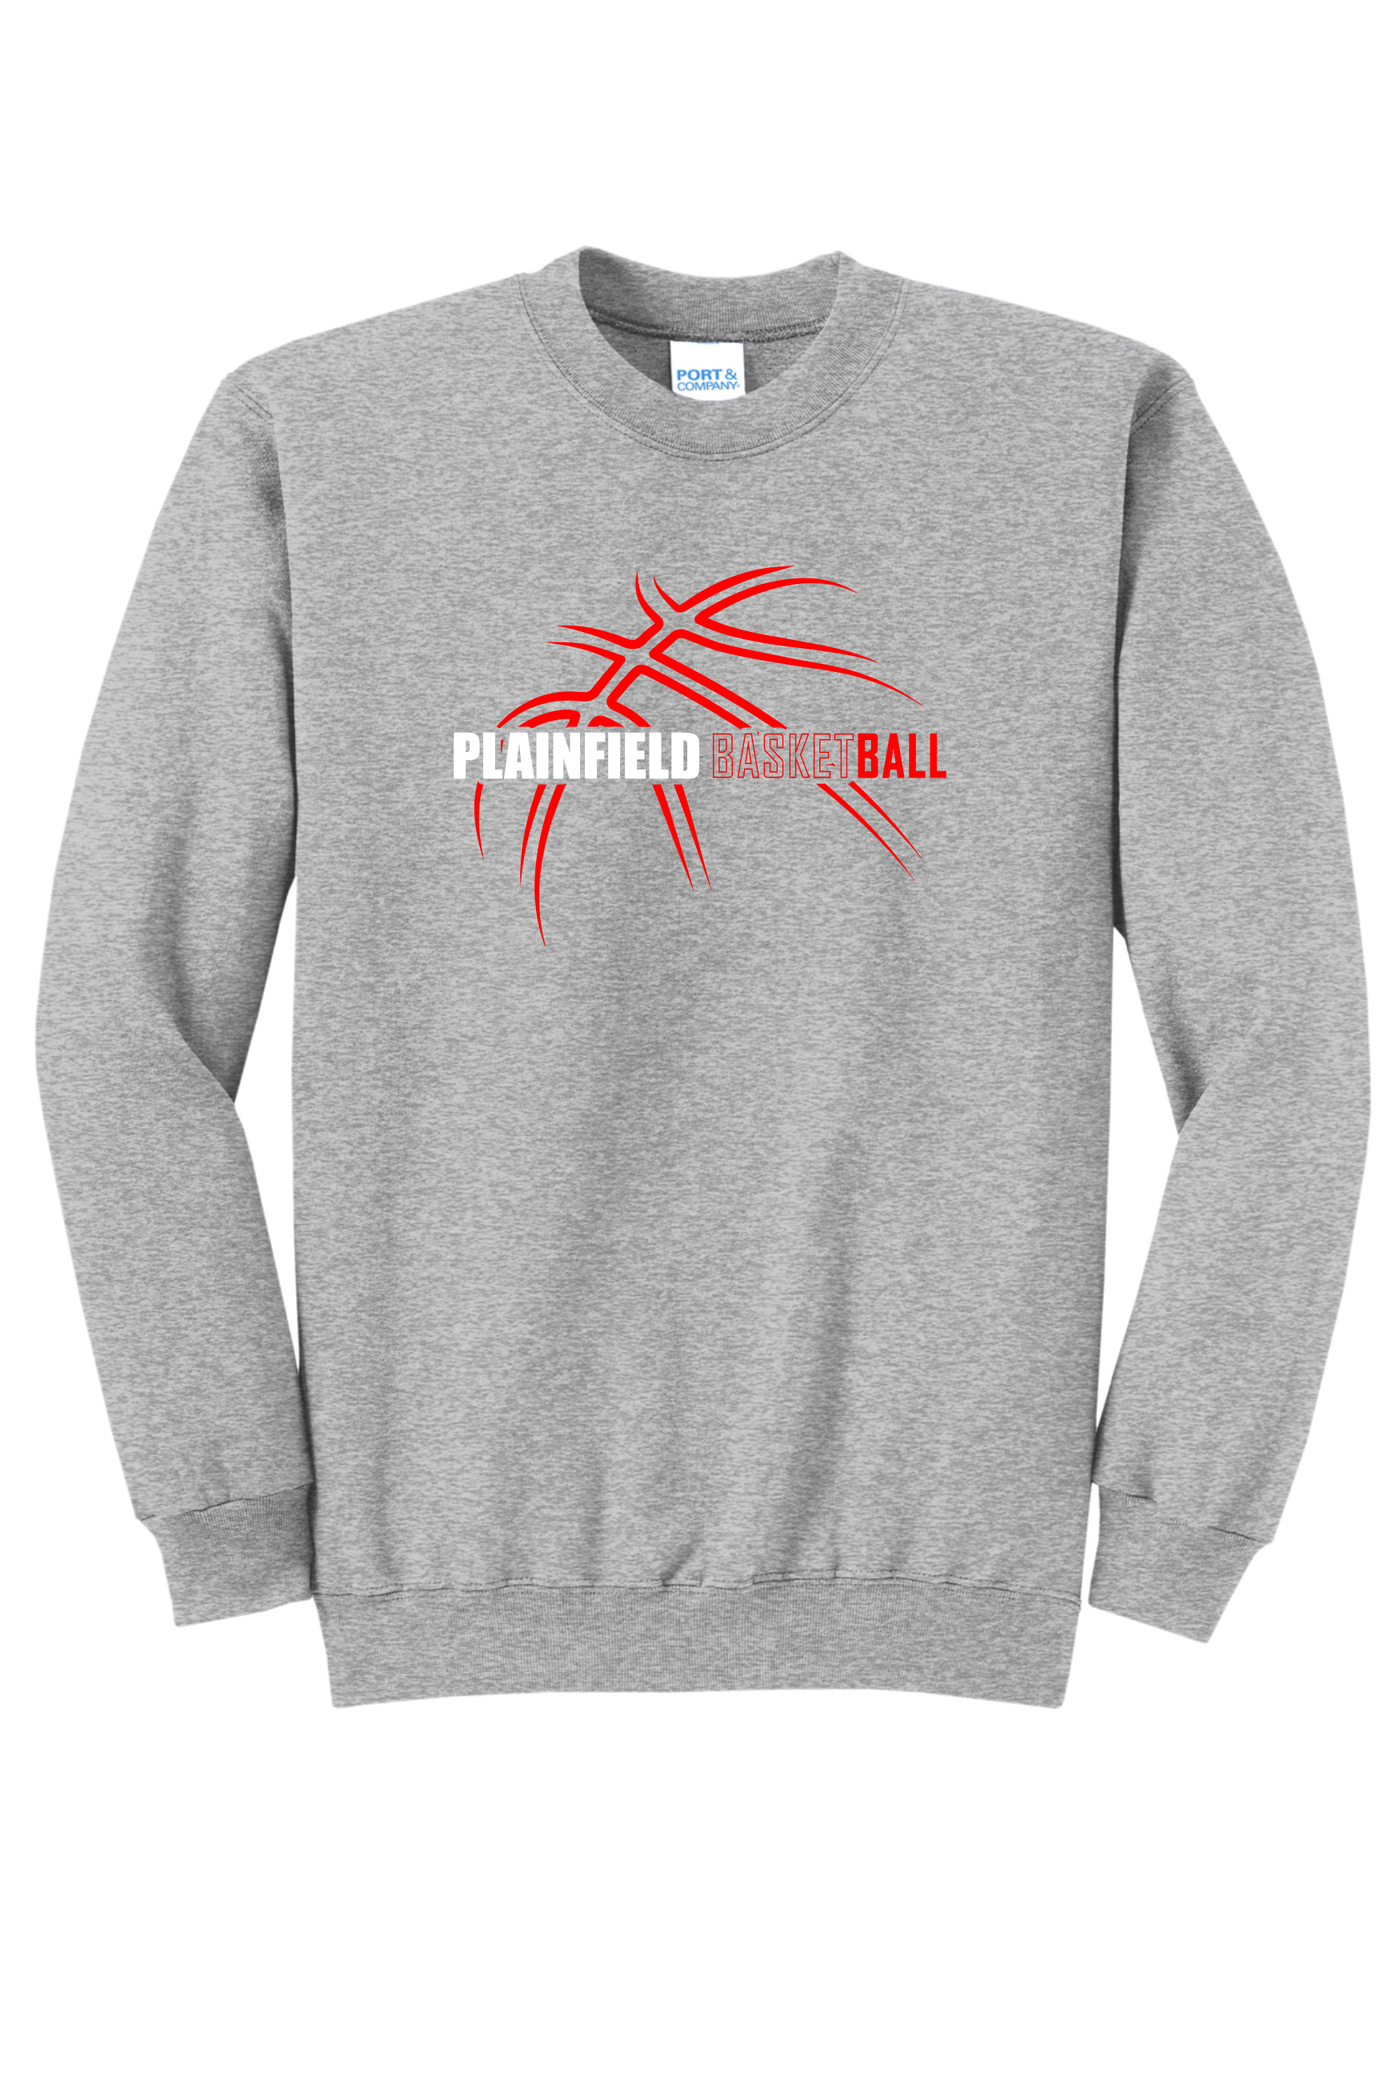 Plainfield Crewneck Sweatshirt - C2 YOUTH - Y&S Designs, LLC